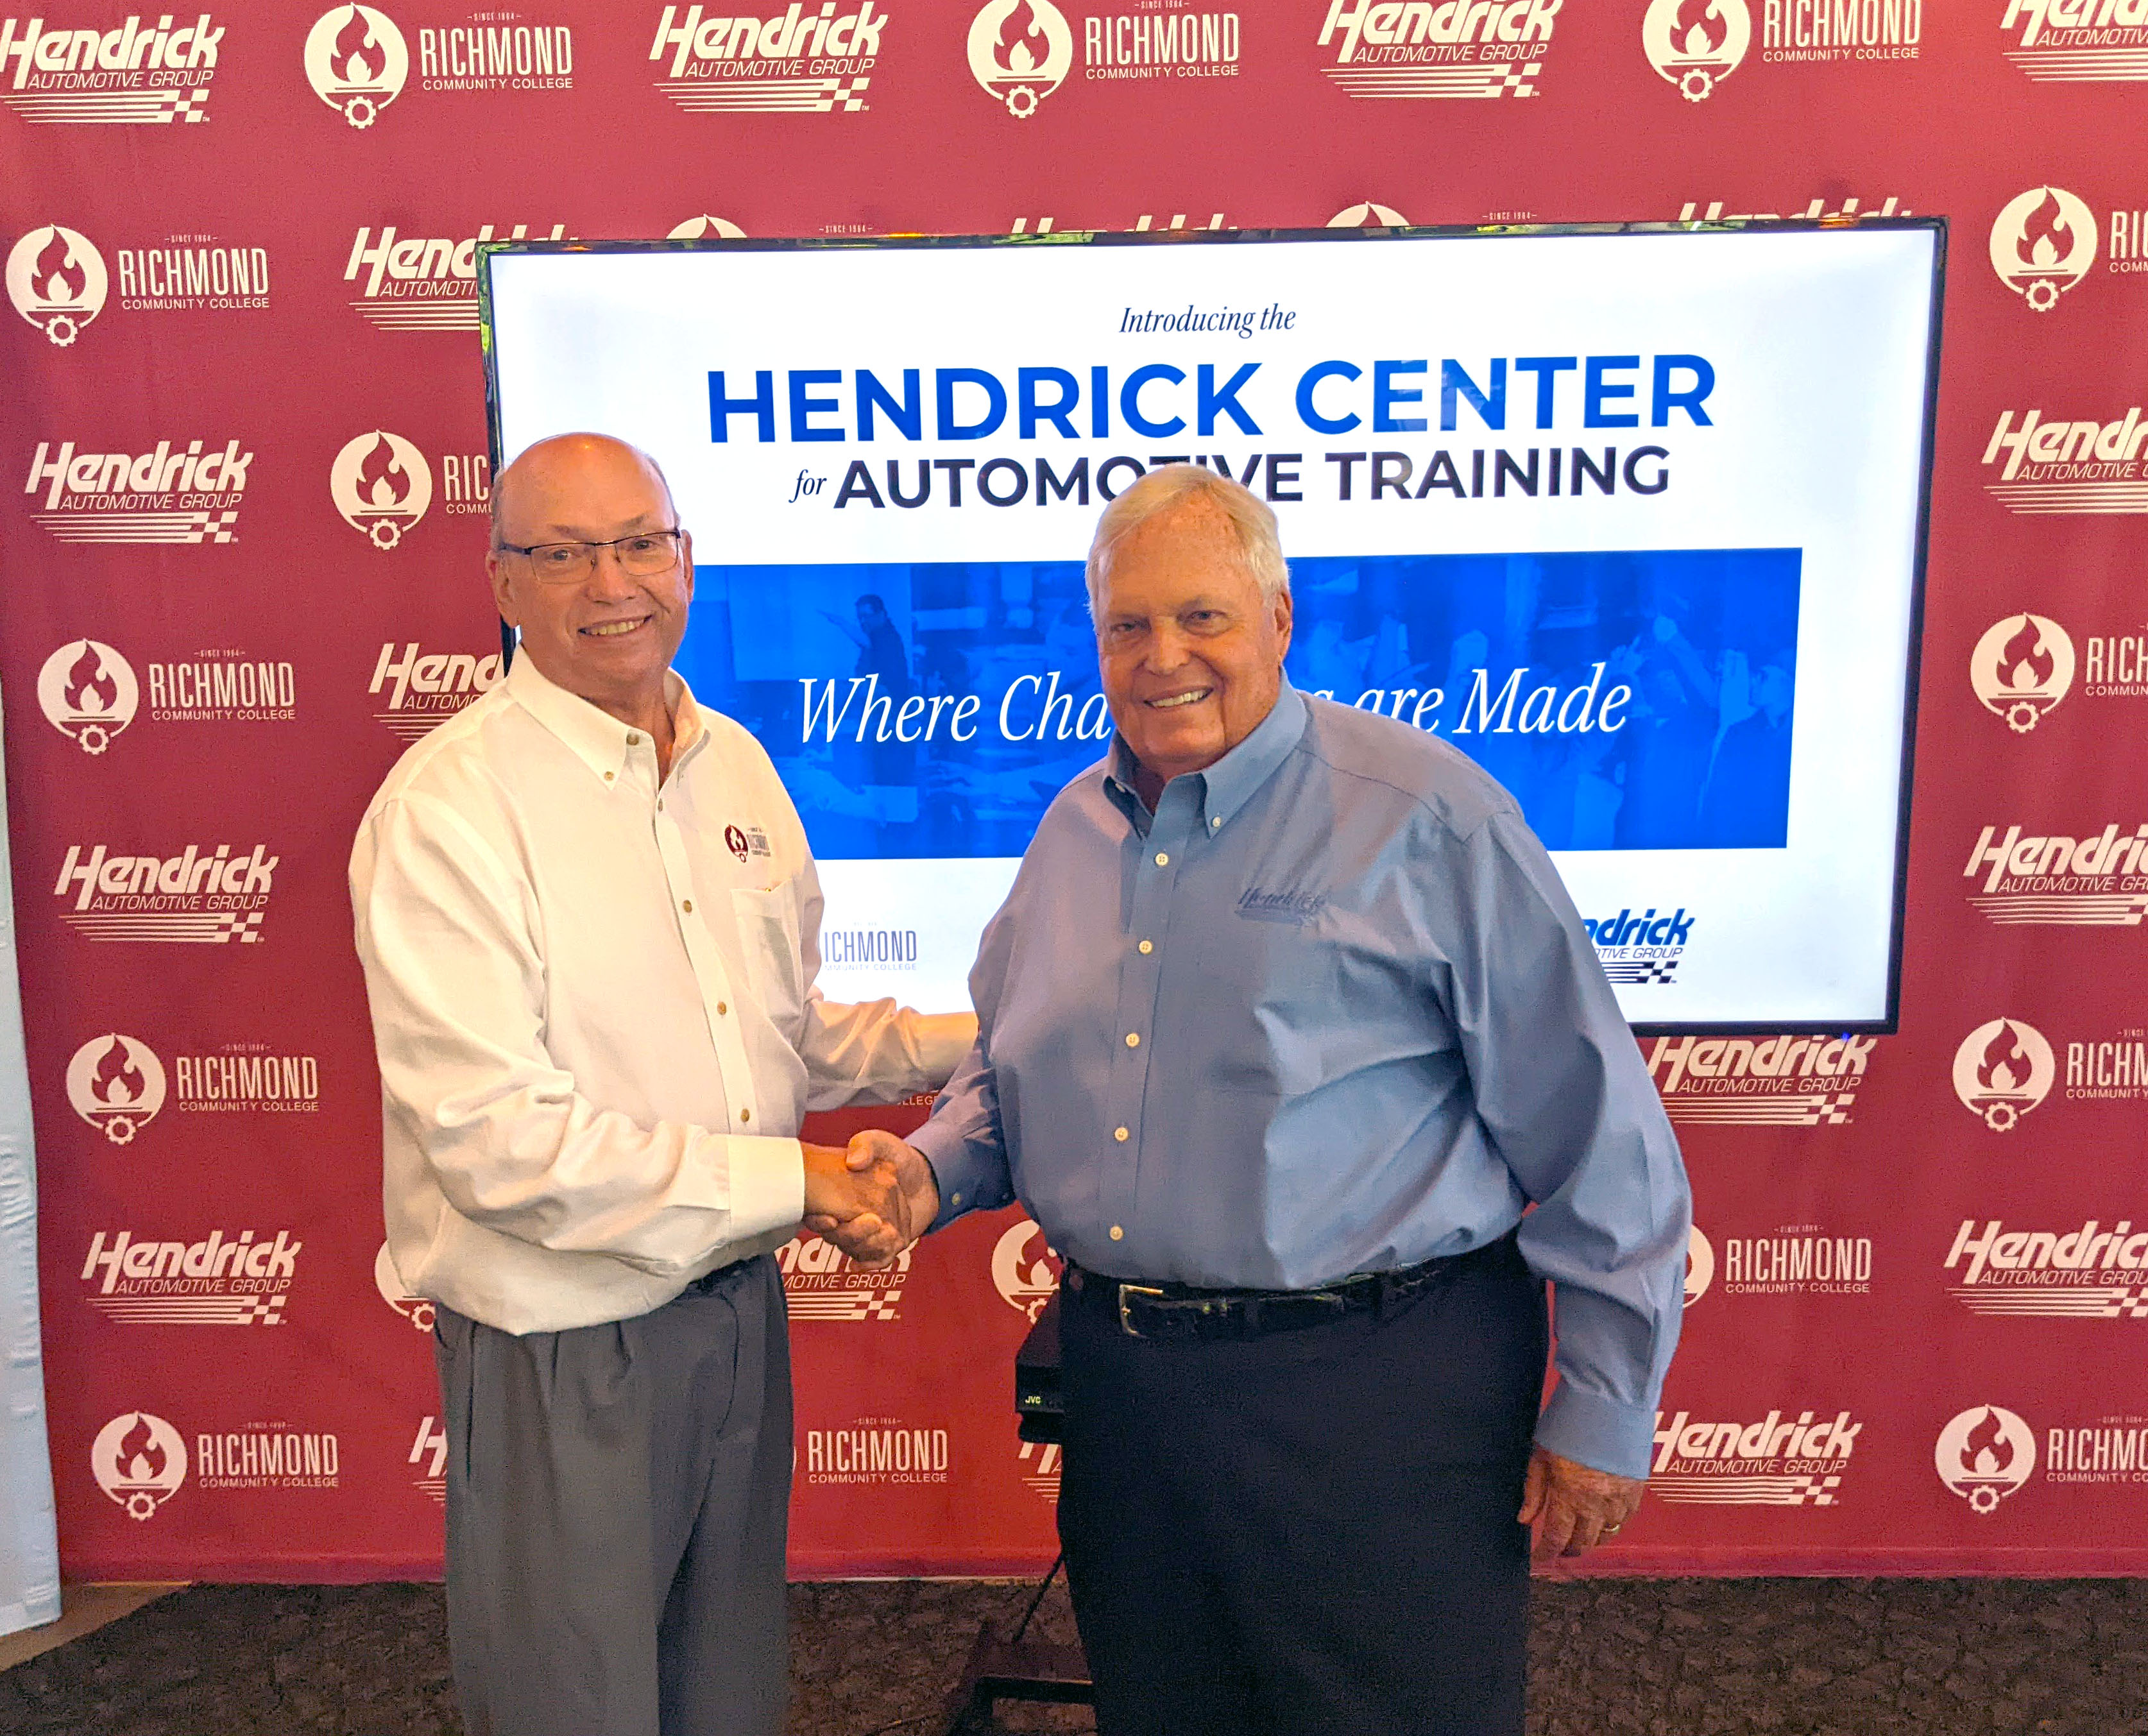 Dr. Dale McInnis and Rick Hendrick shake hands